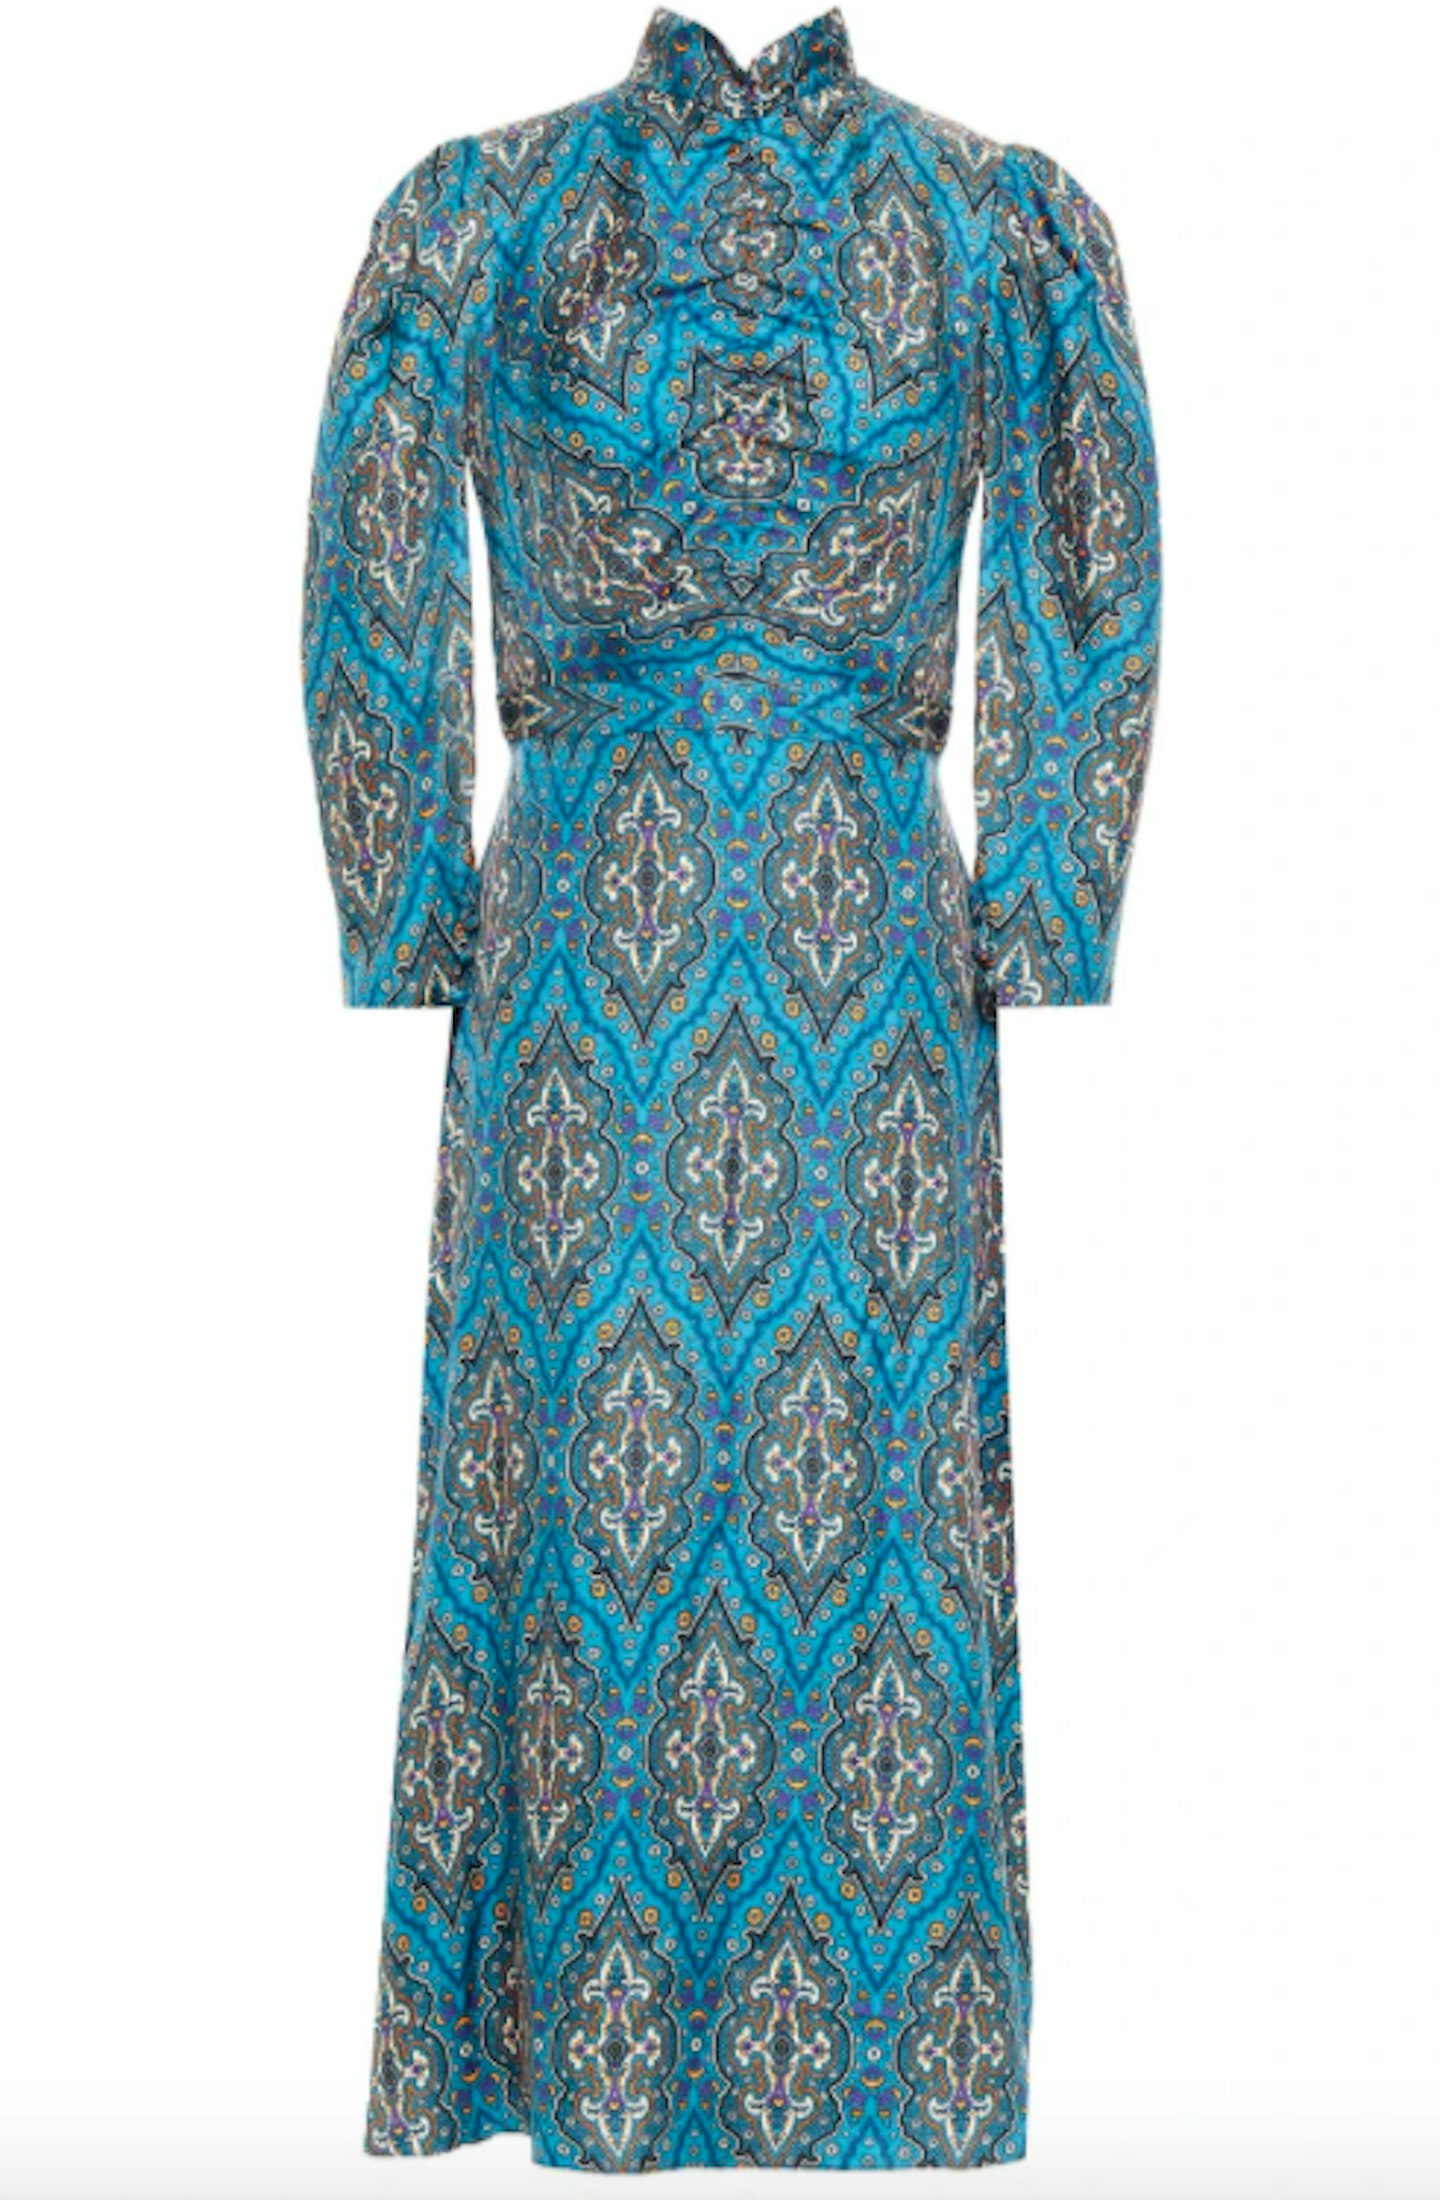 Sandro, Kaela Ruched Printed Silk-Satin Midi Dress, £252